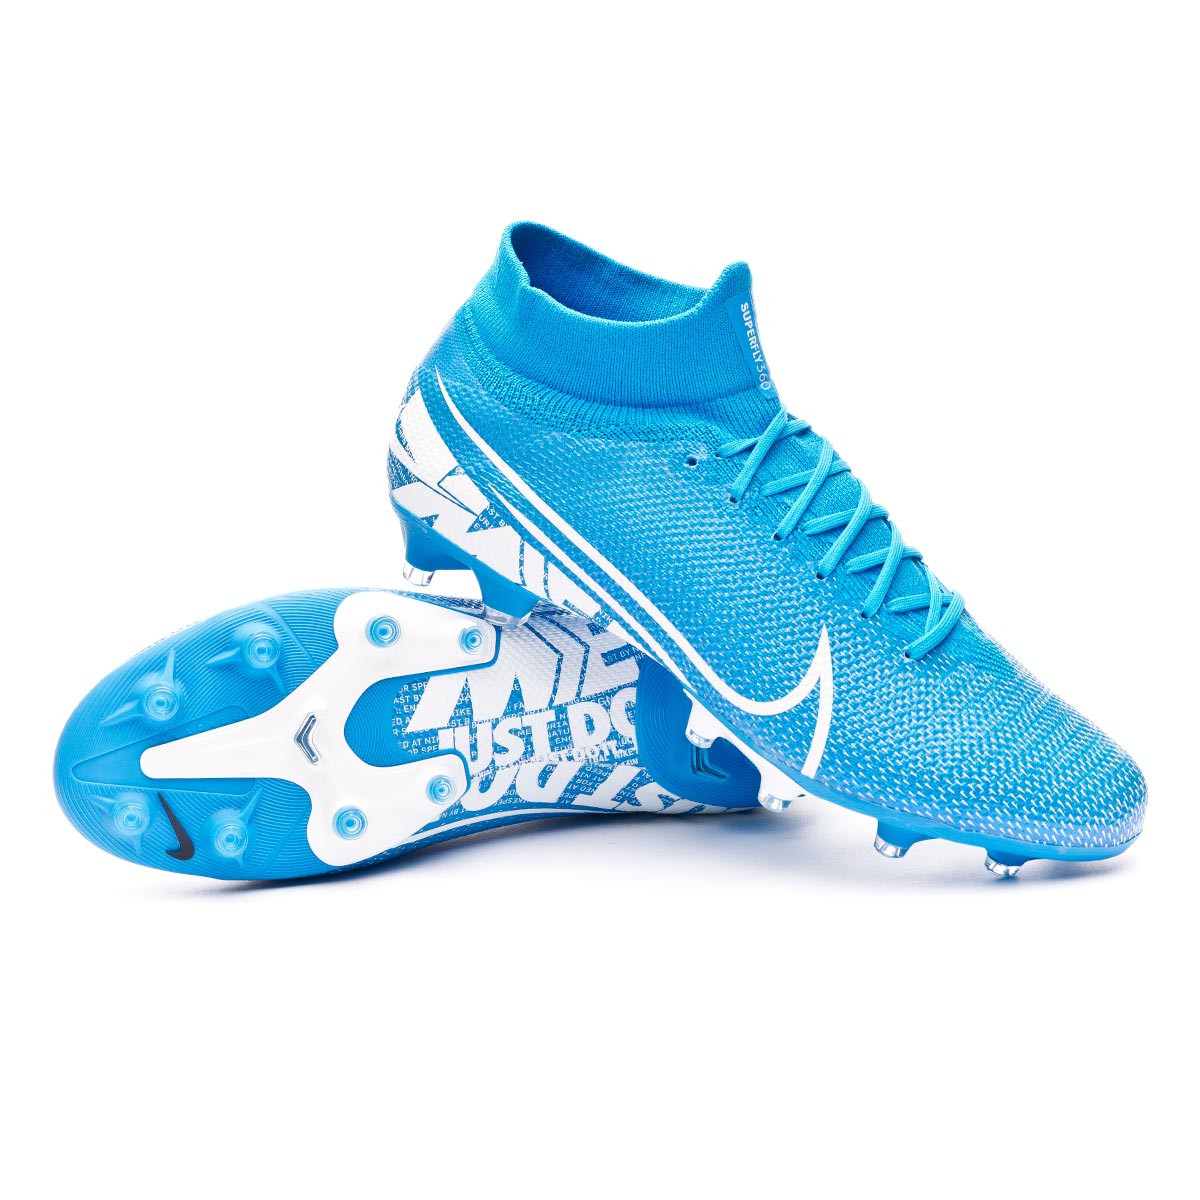 Bota de fútbol Nike Mercurial Superfly VII Pro AG-Pro Blue  hero-White-Obsidian - Tienda de fútbol Fútbol Emotion